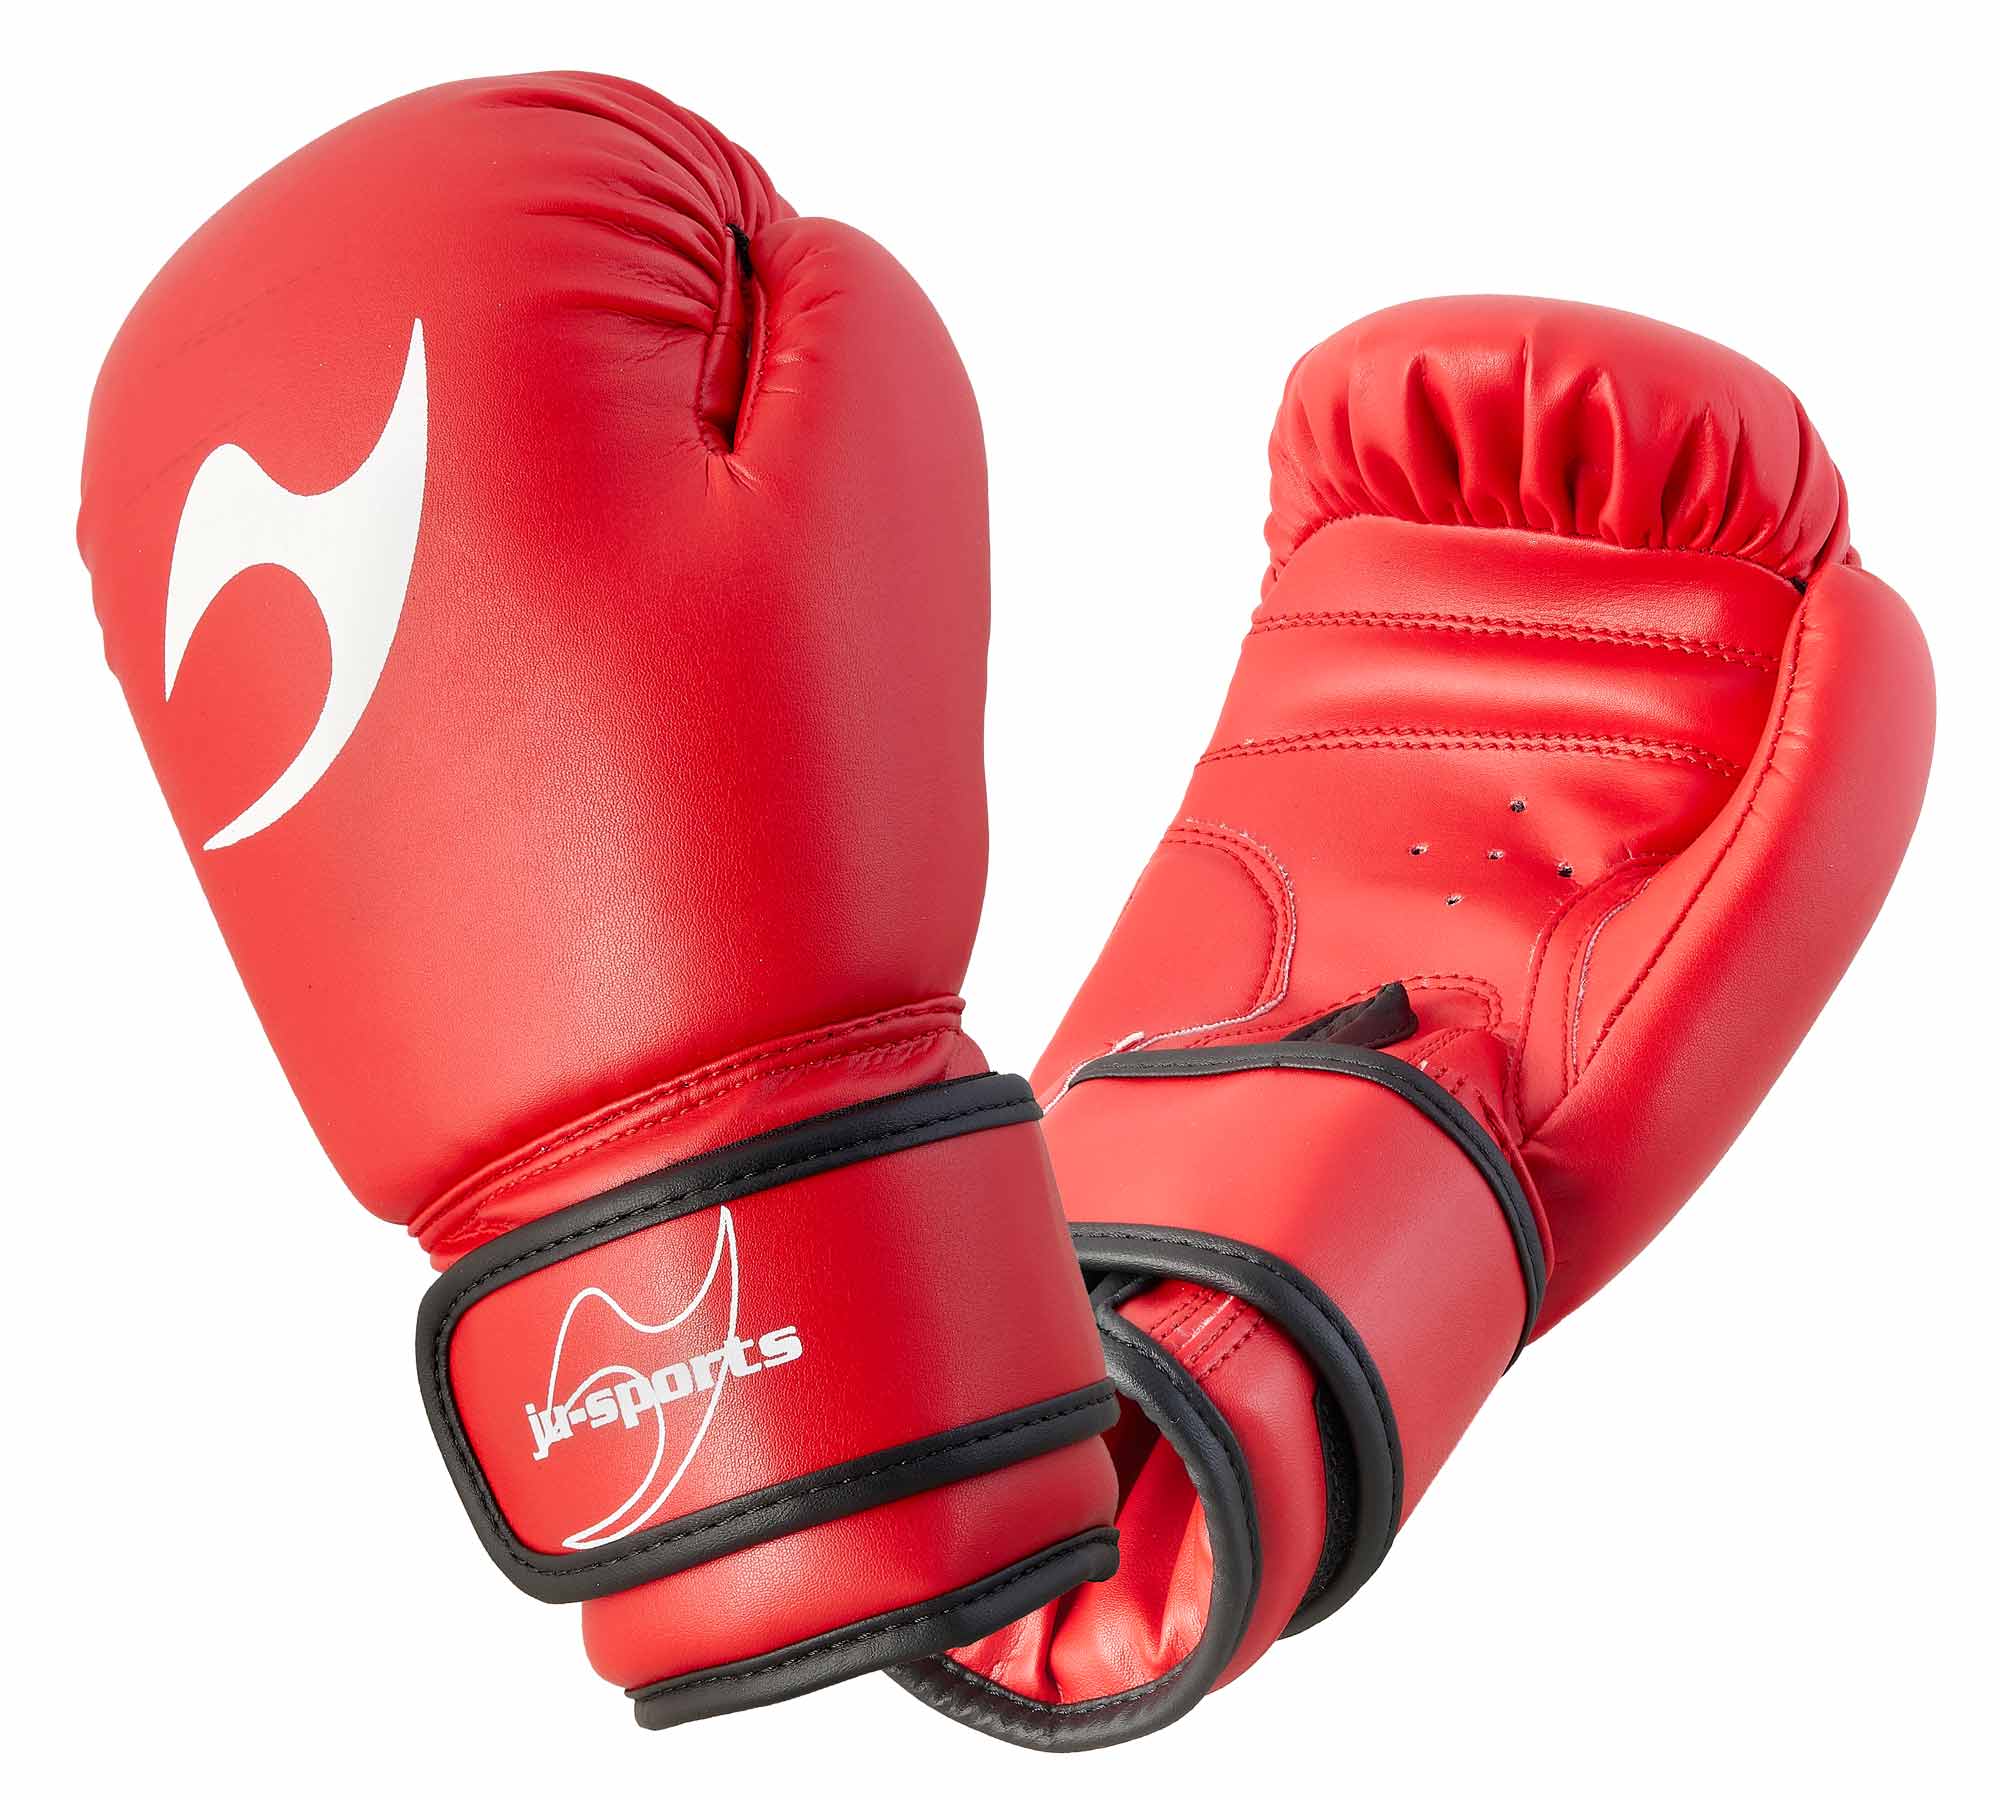 Ju-Sports Boxing Gloves Kids red